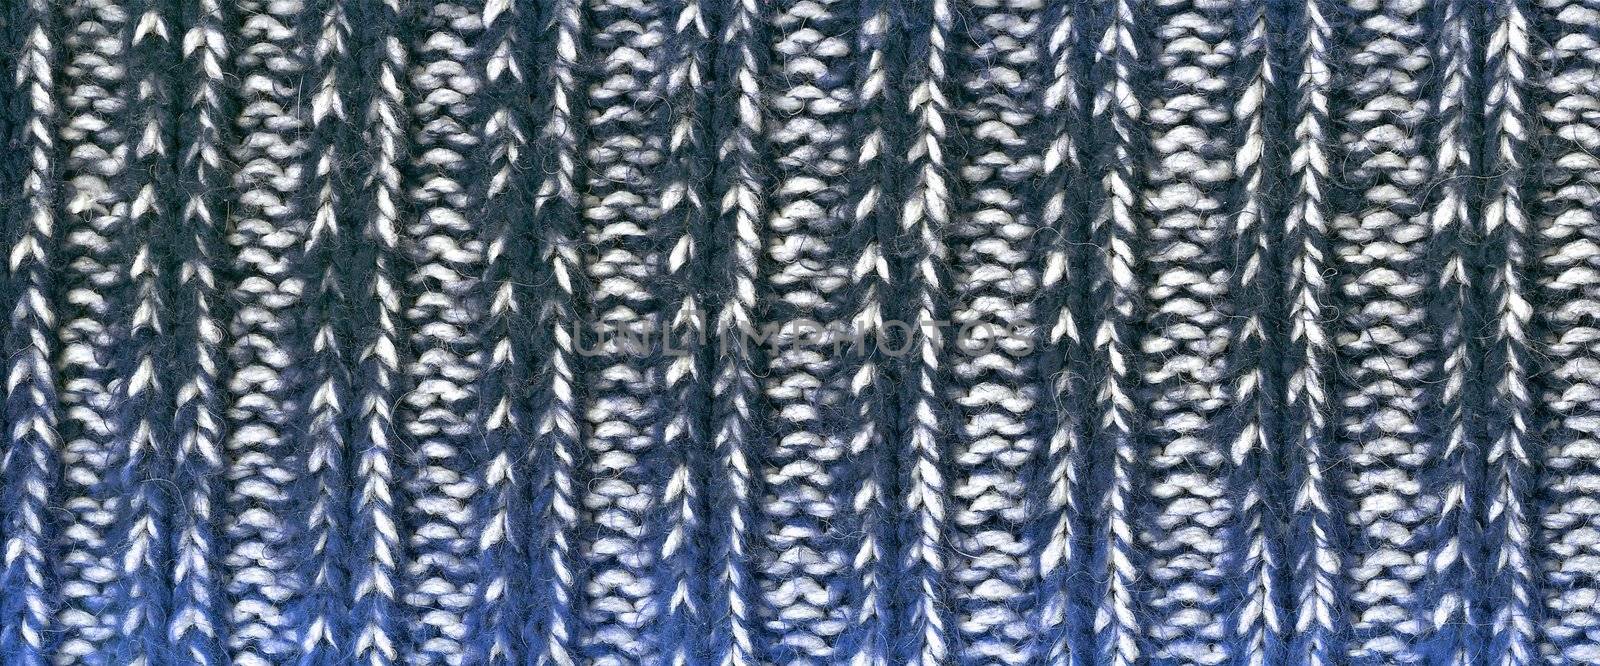 fabric wool texture by ozaiachin